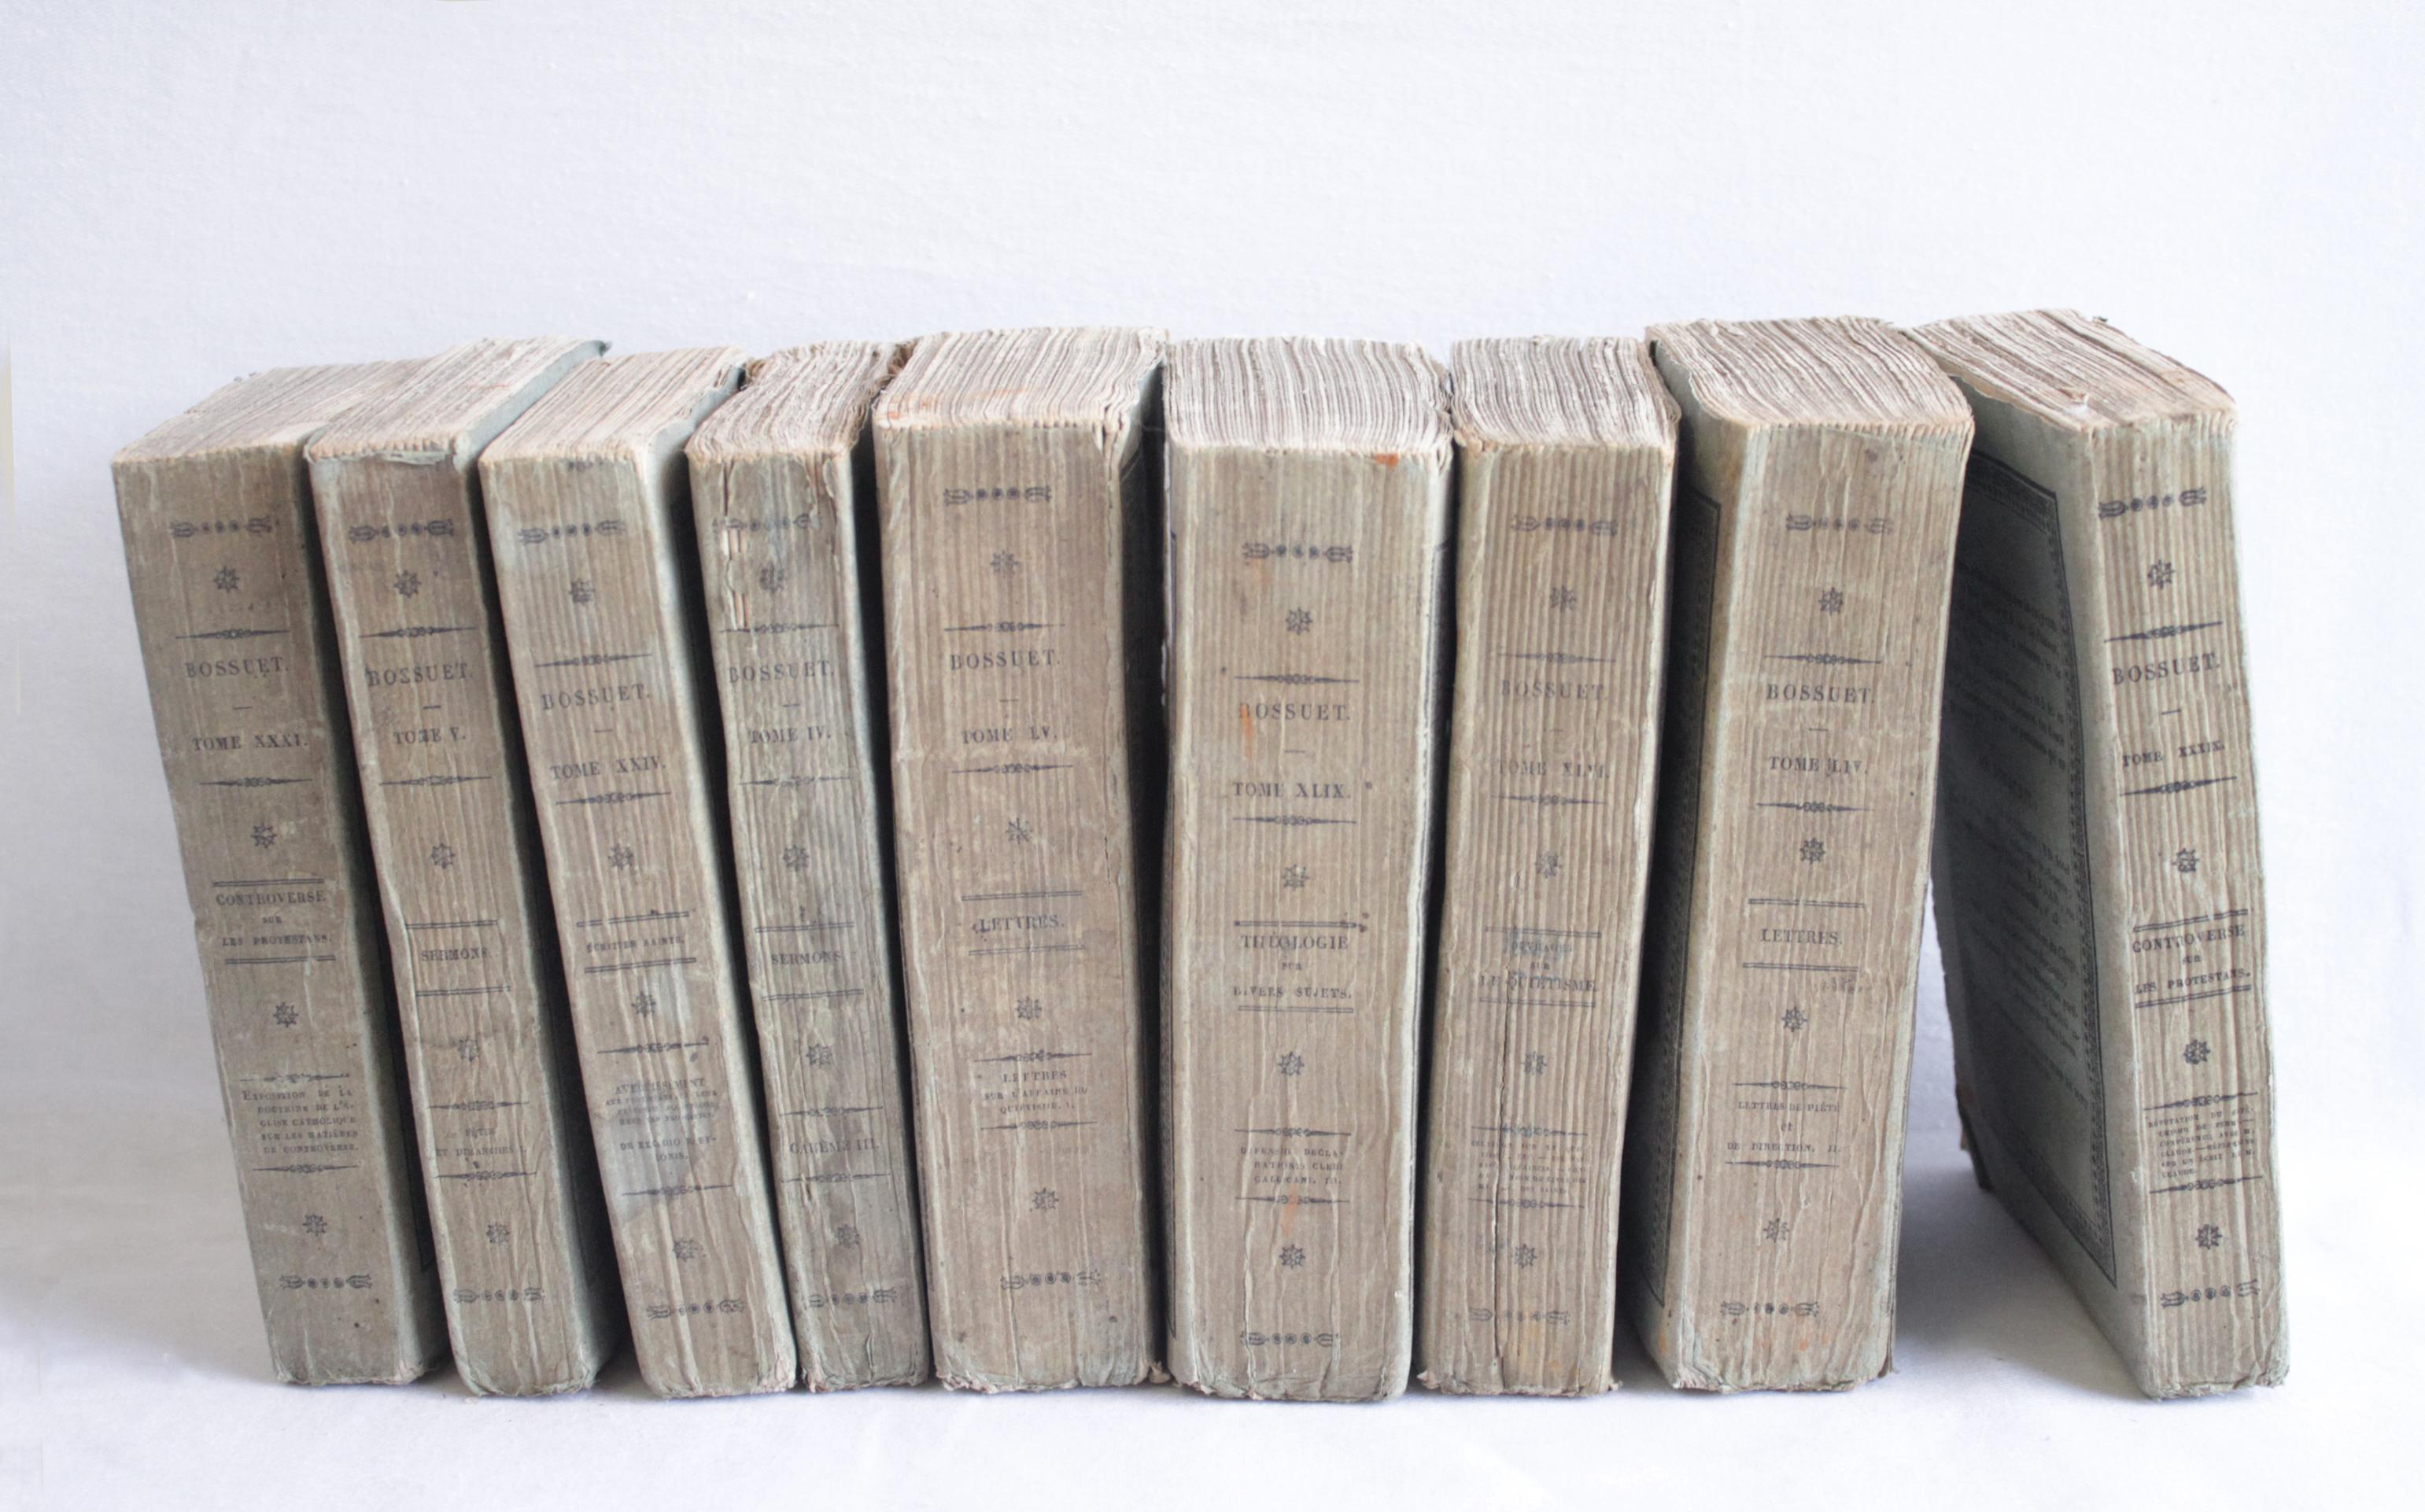 European Set of 9 Antique Paper Bound Books Oeuvres de Bossuet